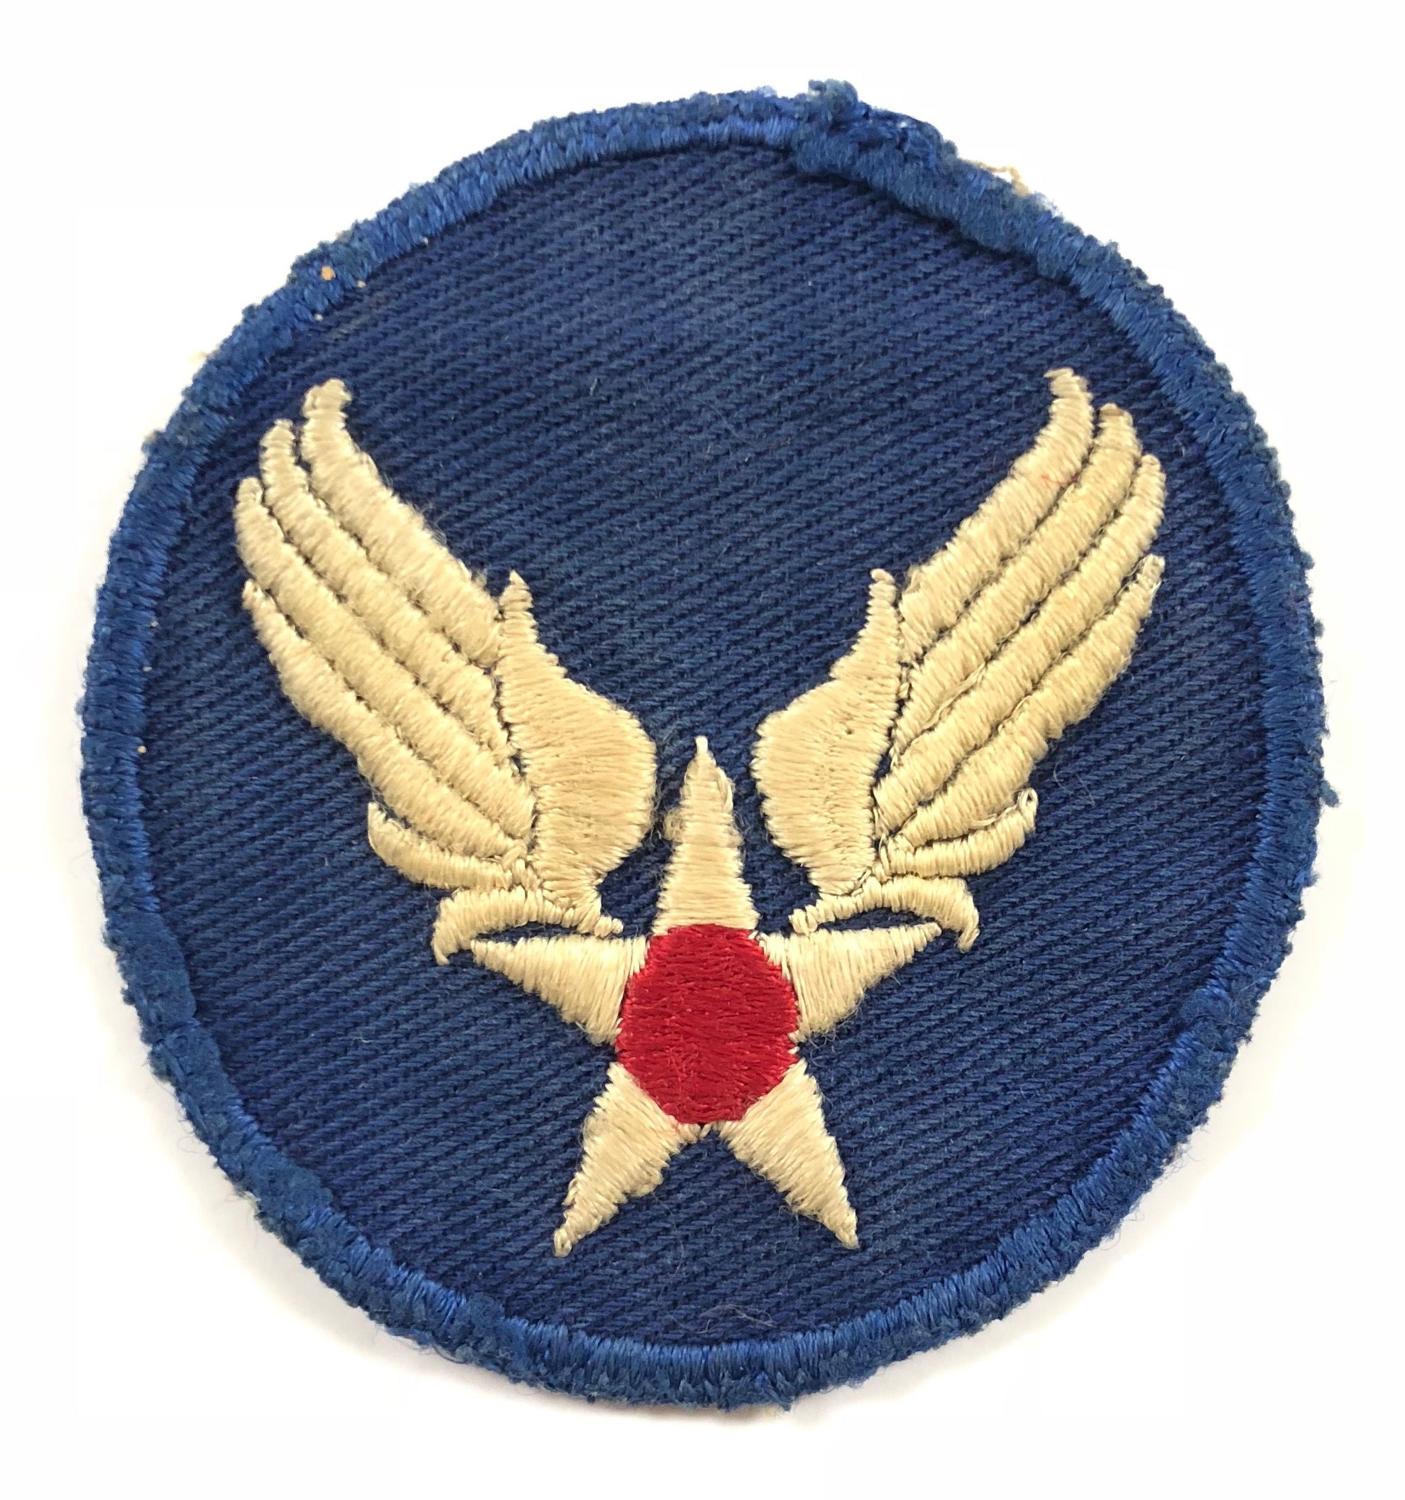 WW2 Period US Airforce Patch.